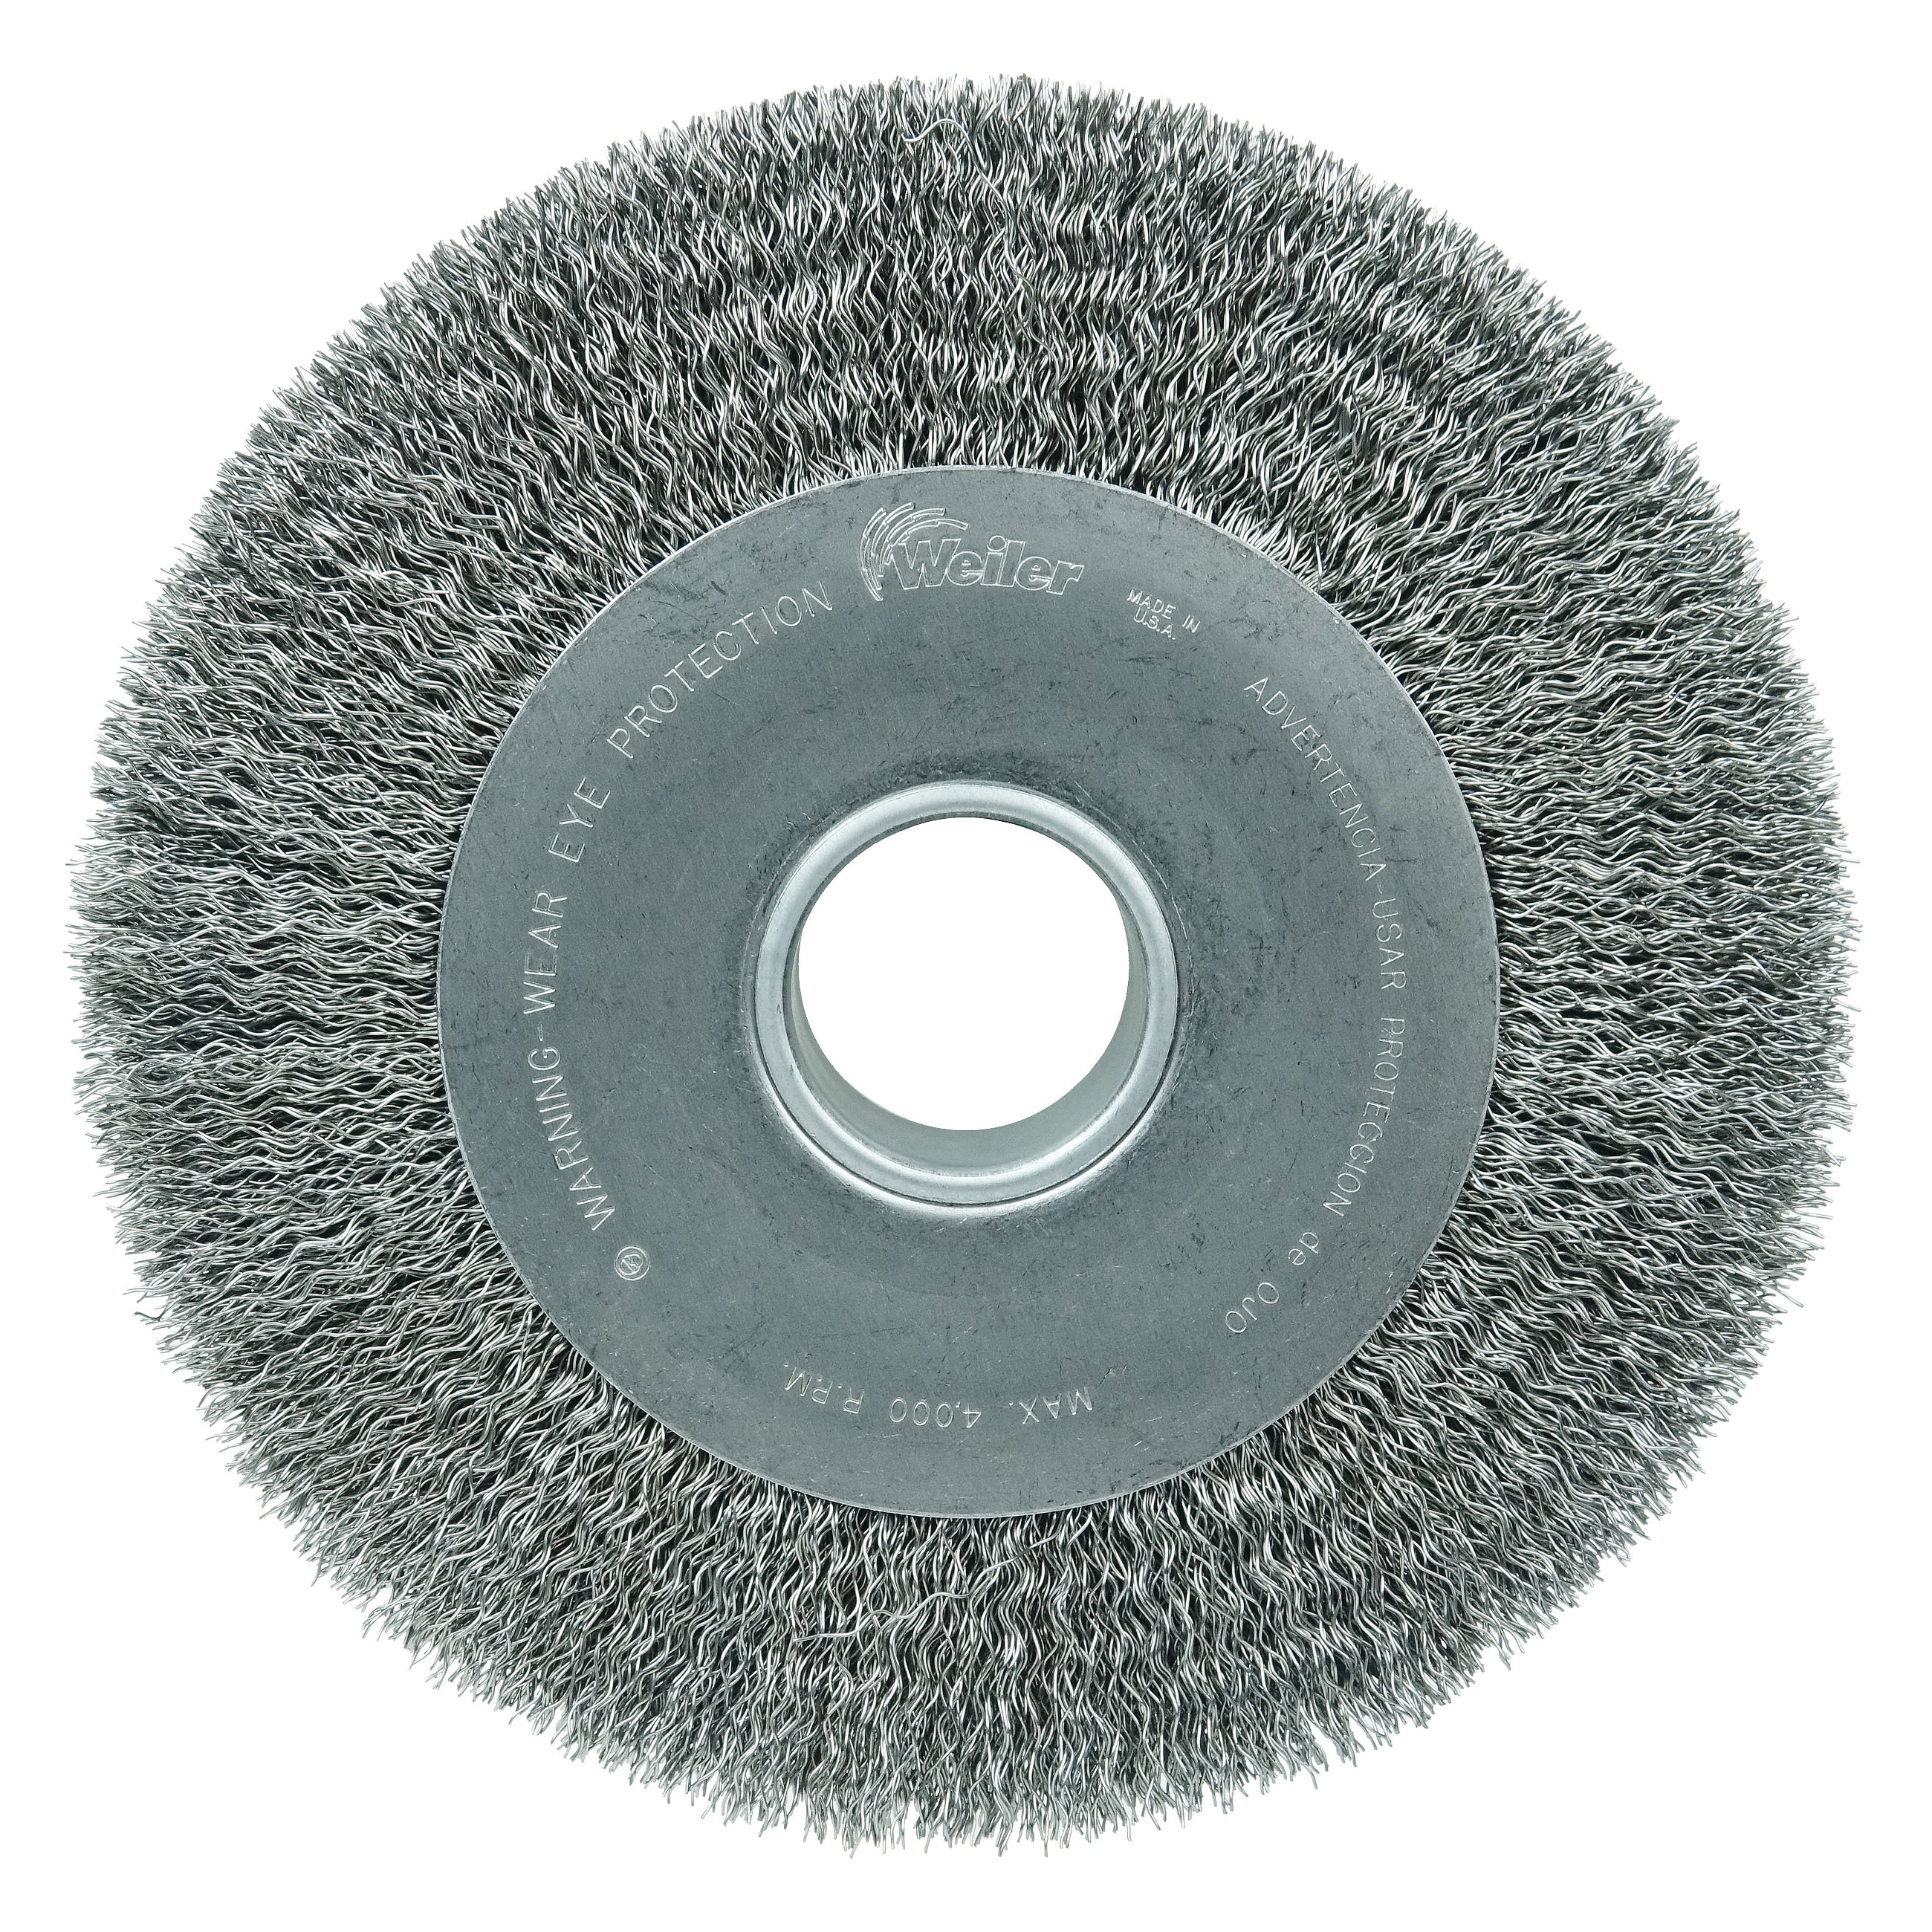 Weiler® 01515 High Density Medium Face Wheel Brush, 8 in Dia Brush, 7/8 in W Face, 0.014 in Dia Filament/Wire Crimped Filament/Wire, 5/8 in Arbor Hole